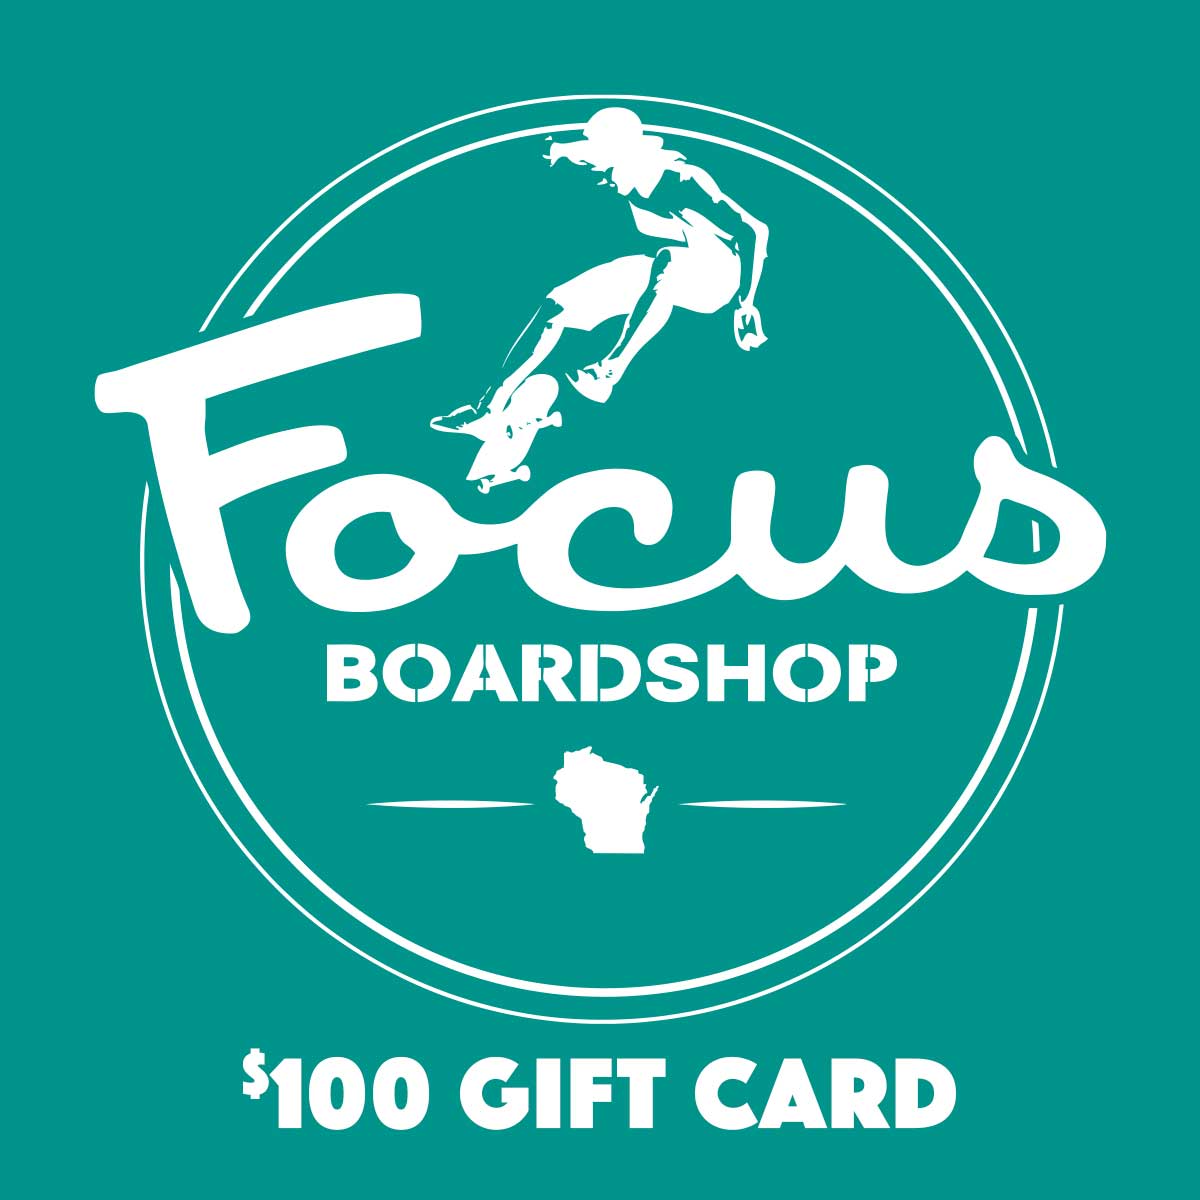 Focus Boardshop $100 Gift Card